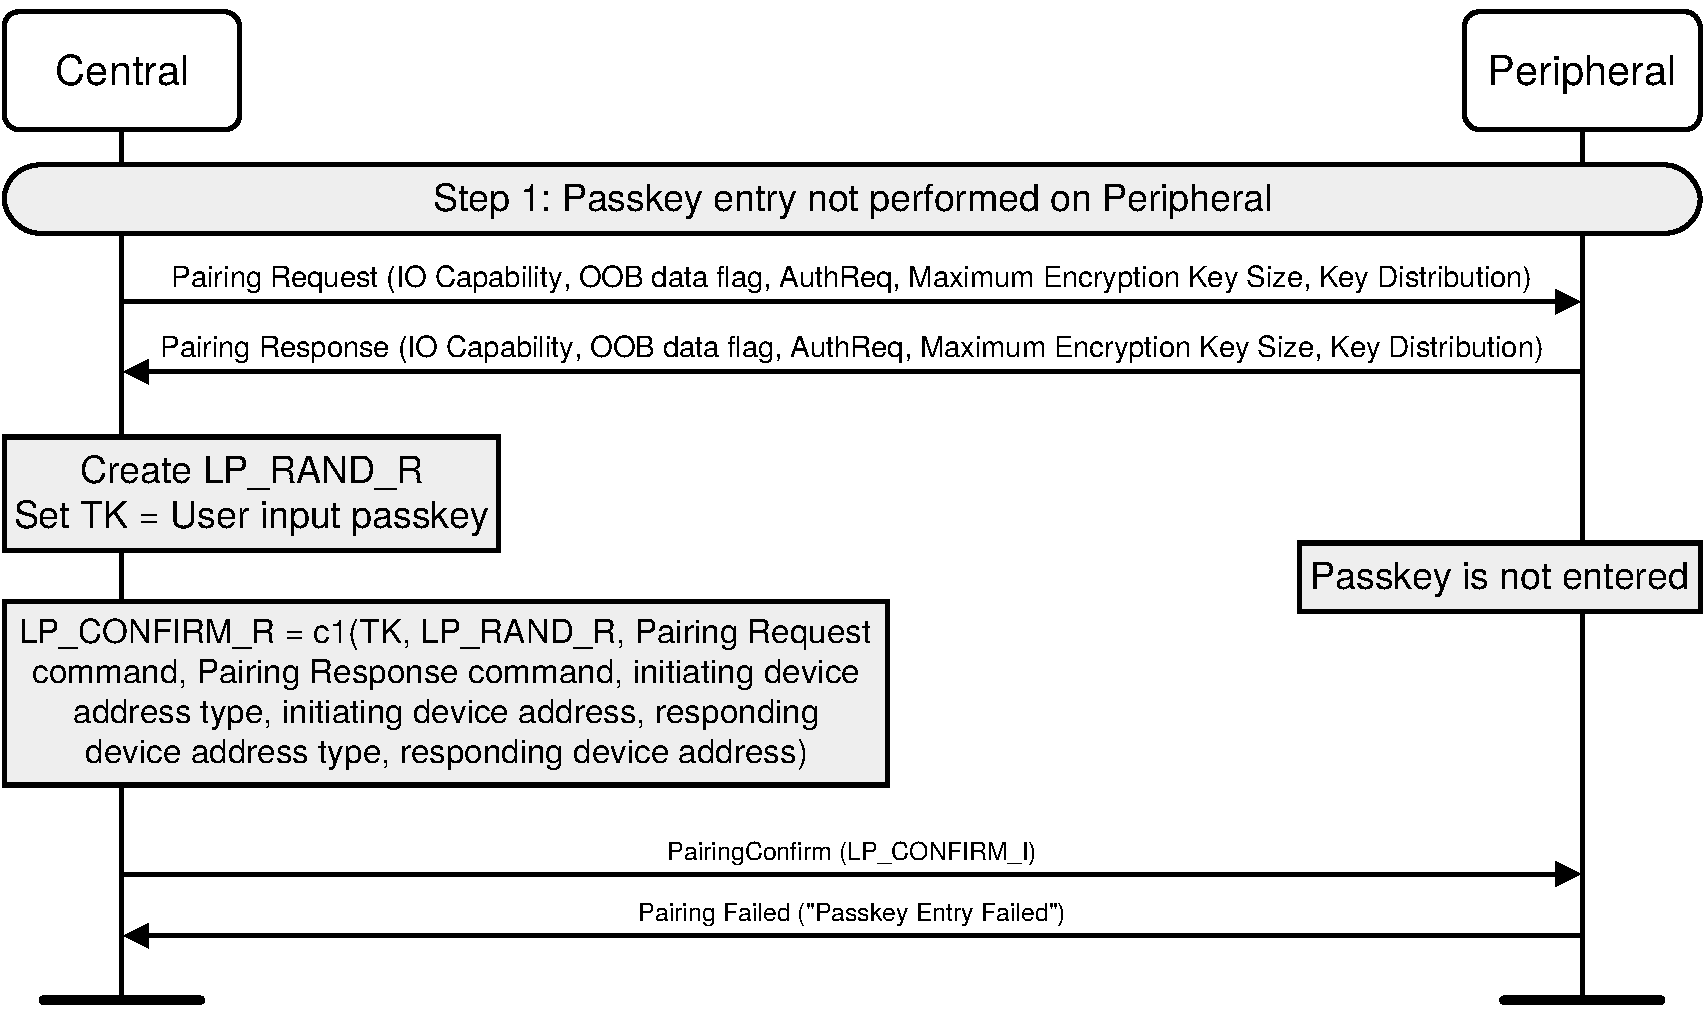 Passkey Entry failure on Peripheral